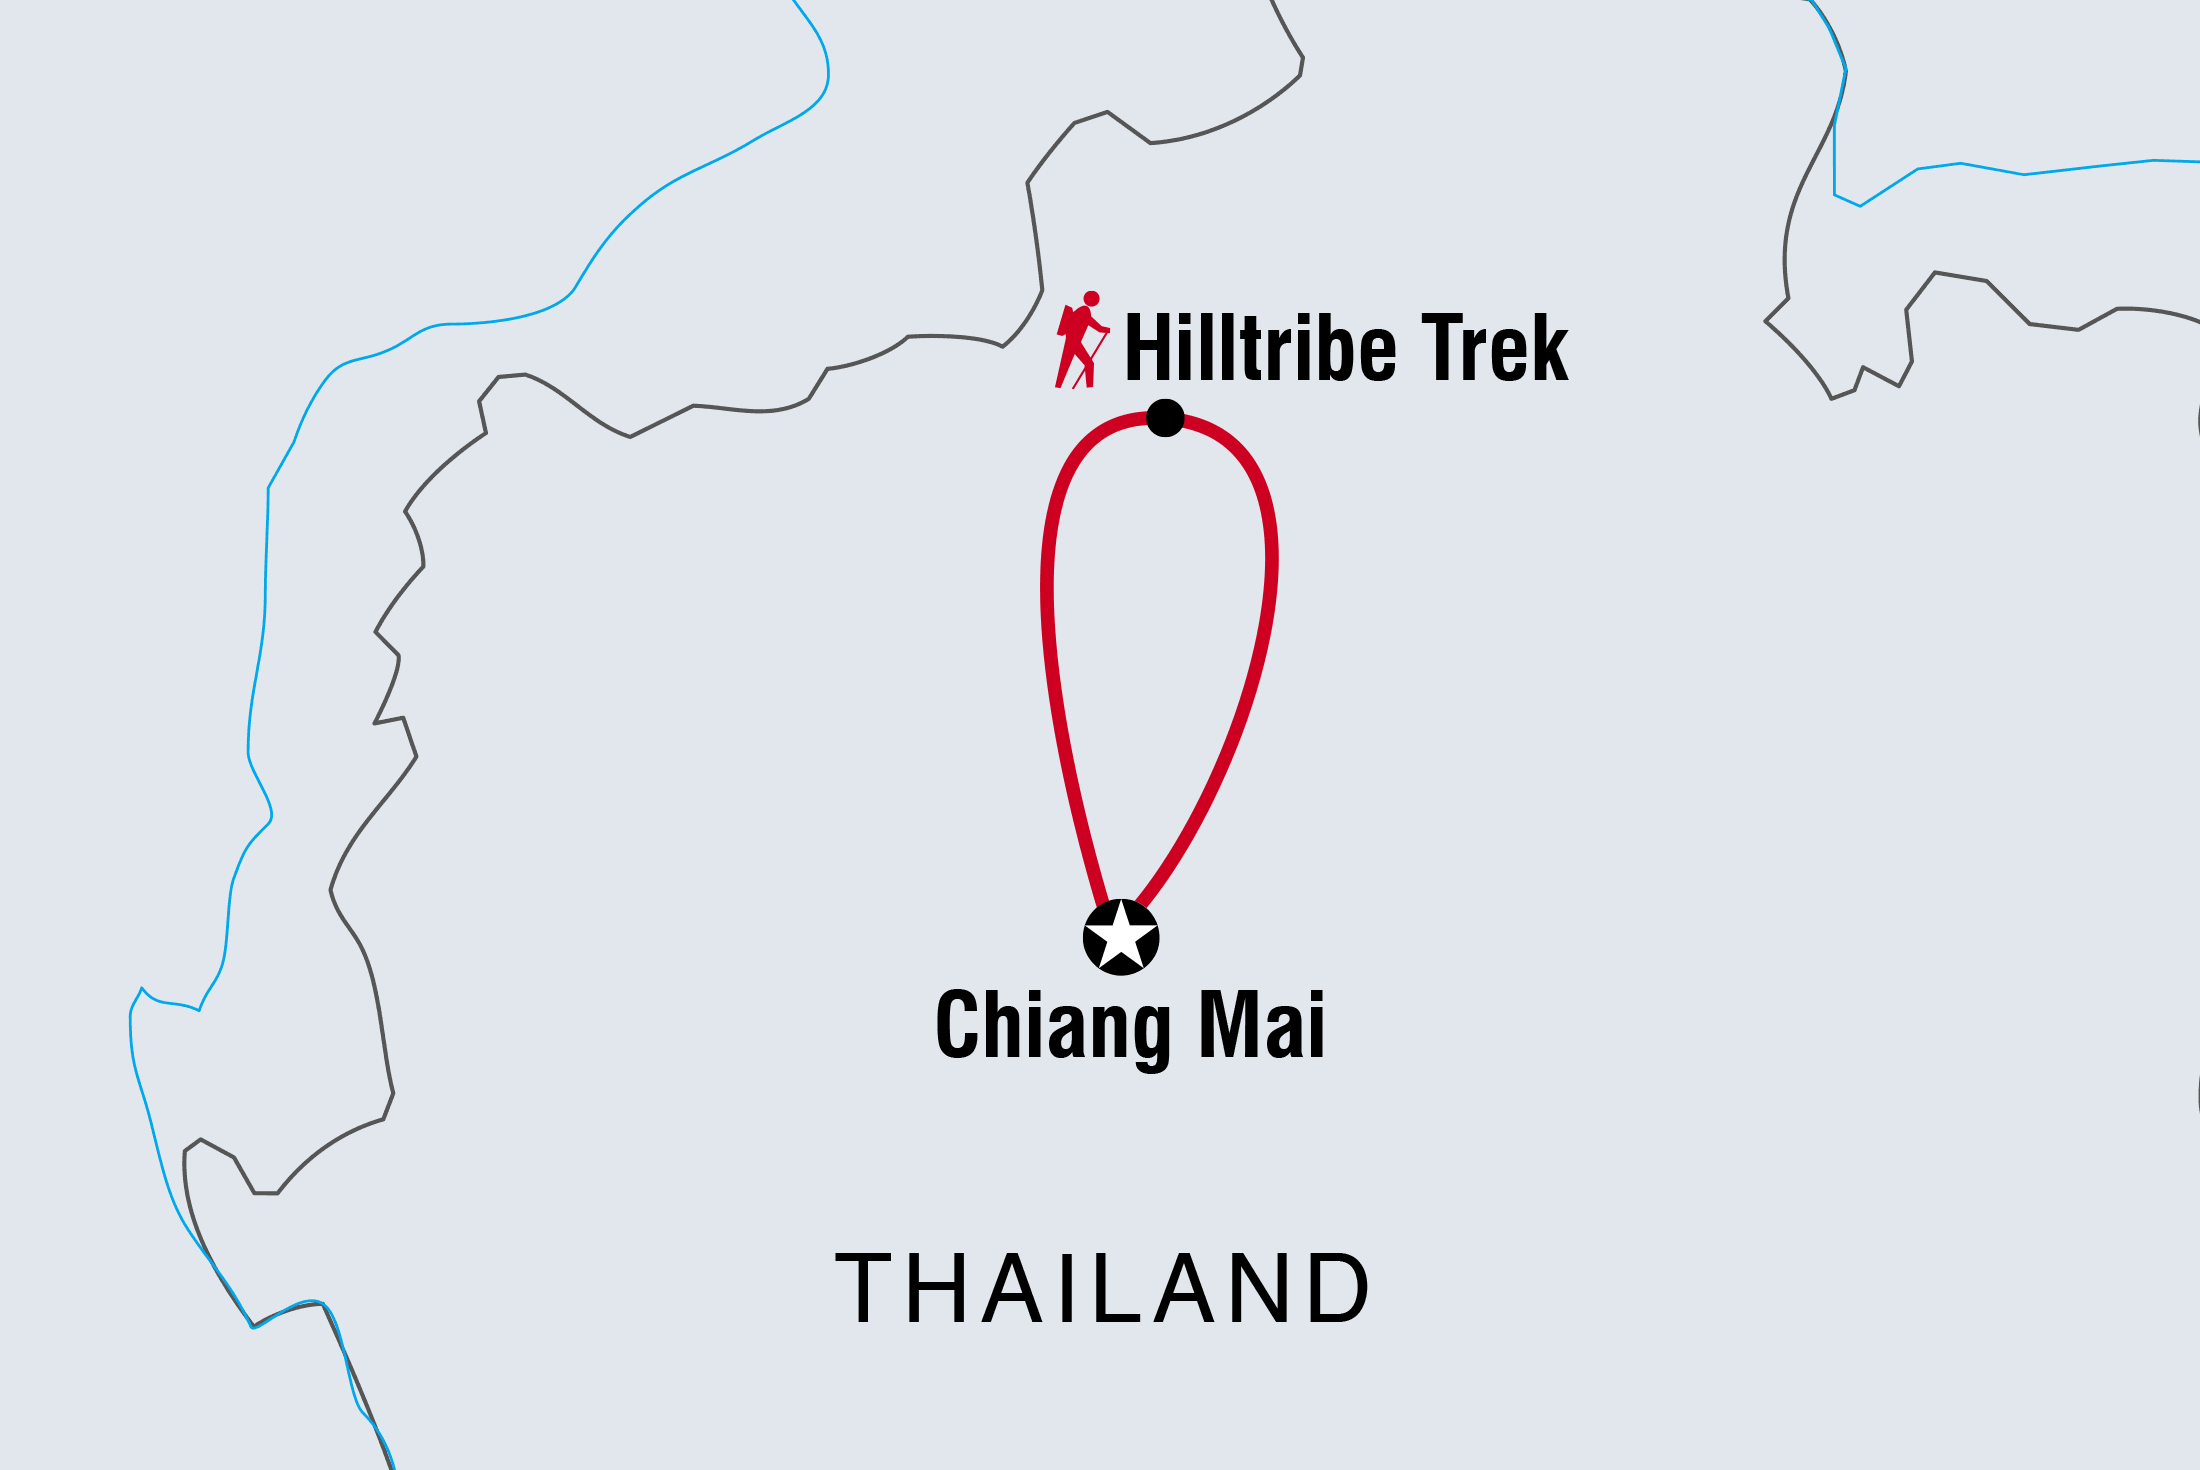 tourhub | Intrepid Travel | Thailand Hilltribe Trek | Tour Map